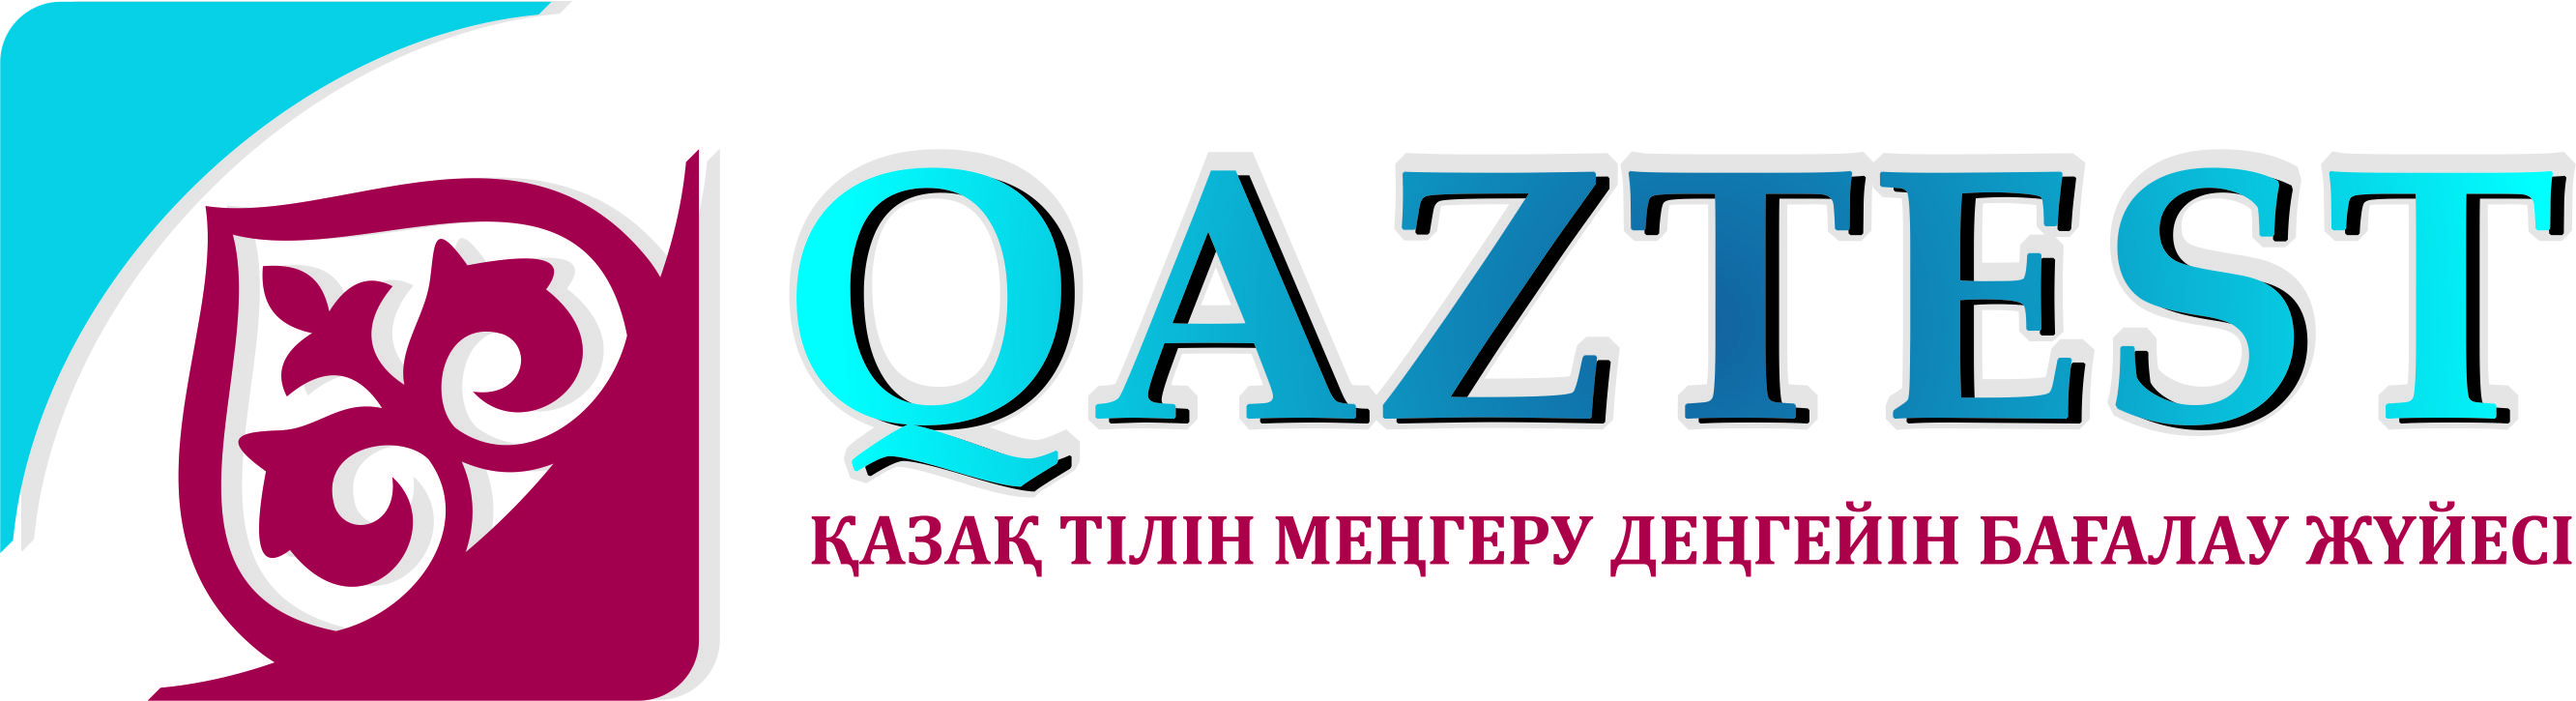 Logotip KAZTEST JPEG.jpg